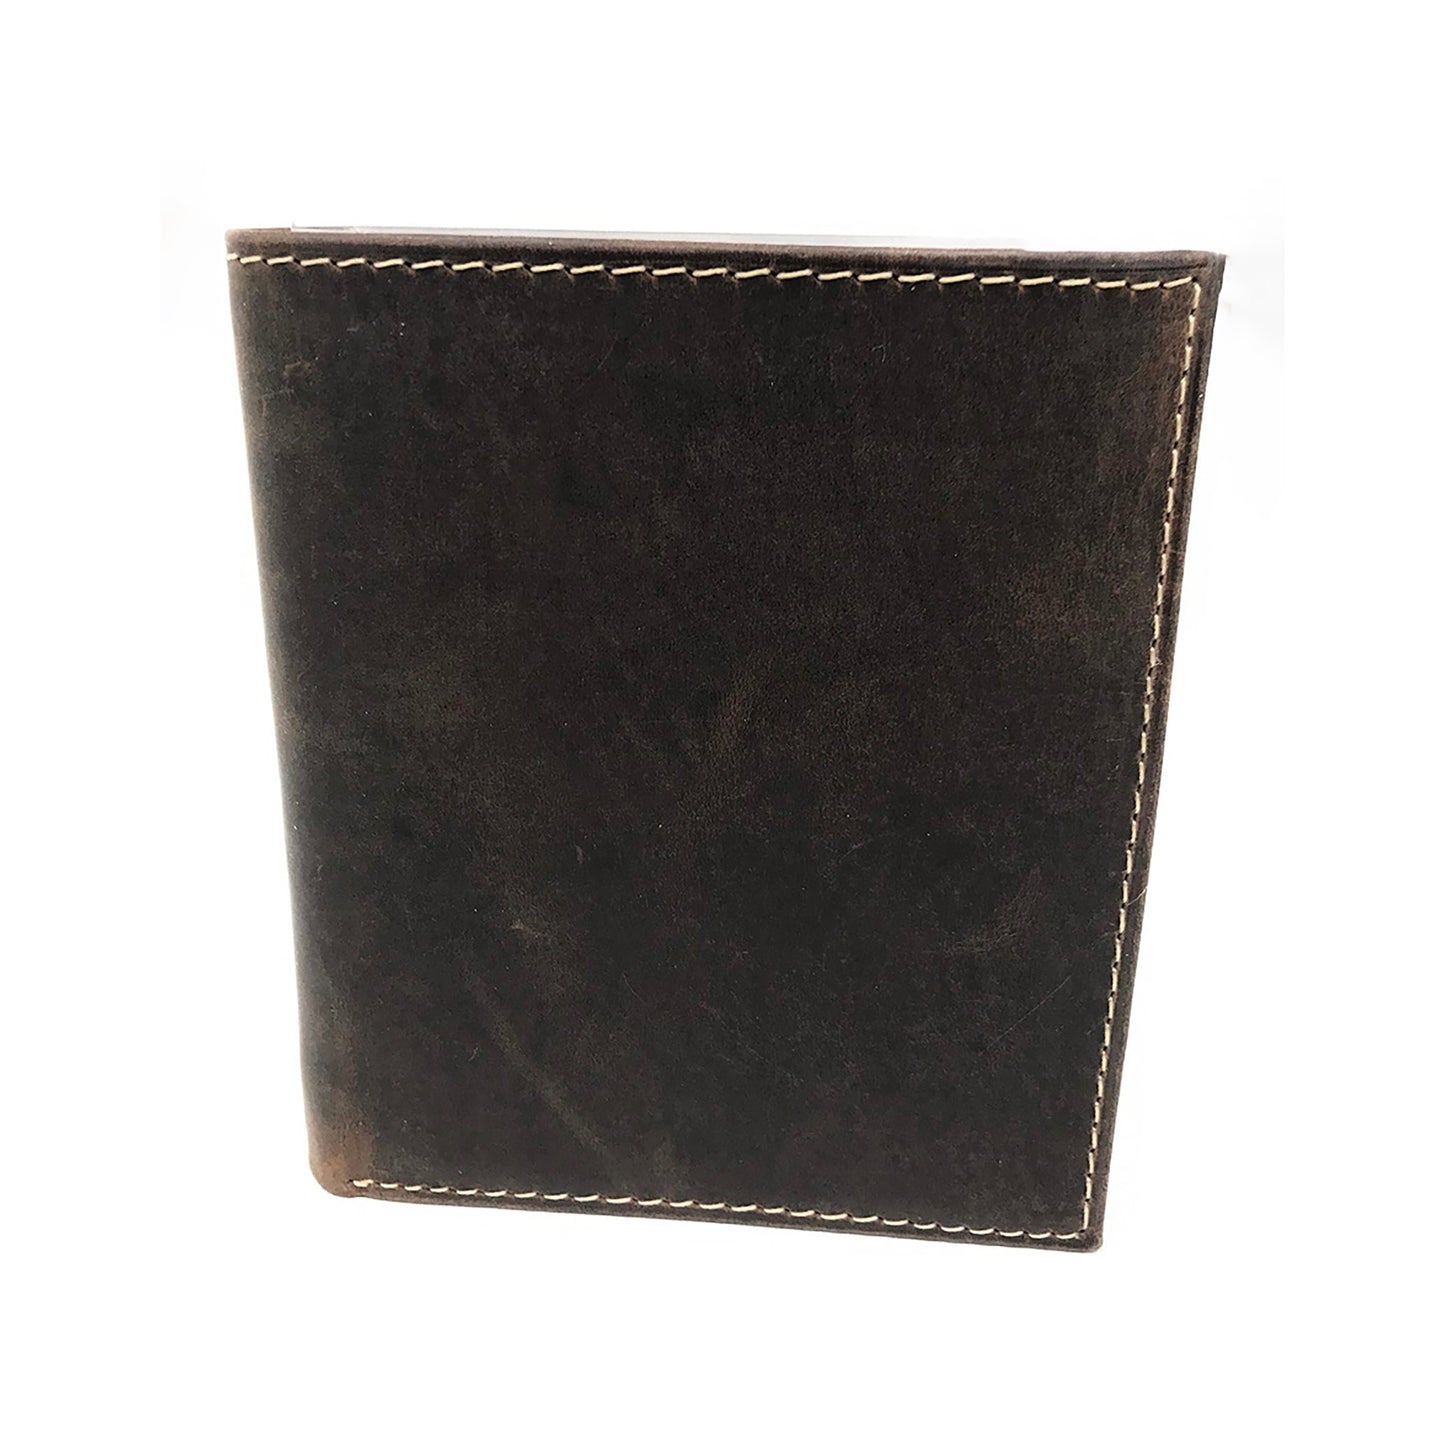 E Elton Rfid Blocking Hunter Genuine Leather Bifold Wallet Holds Up To 13 Cards